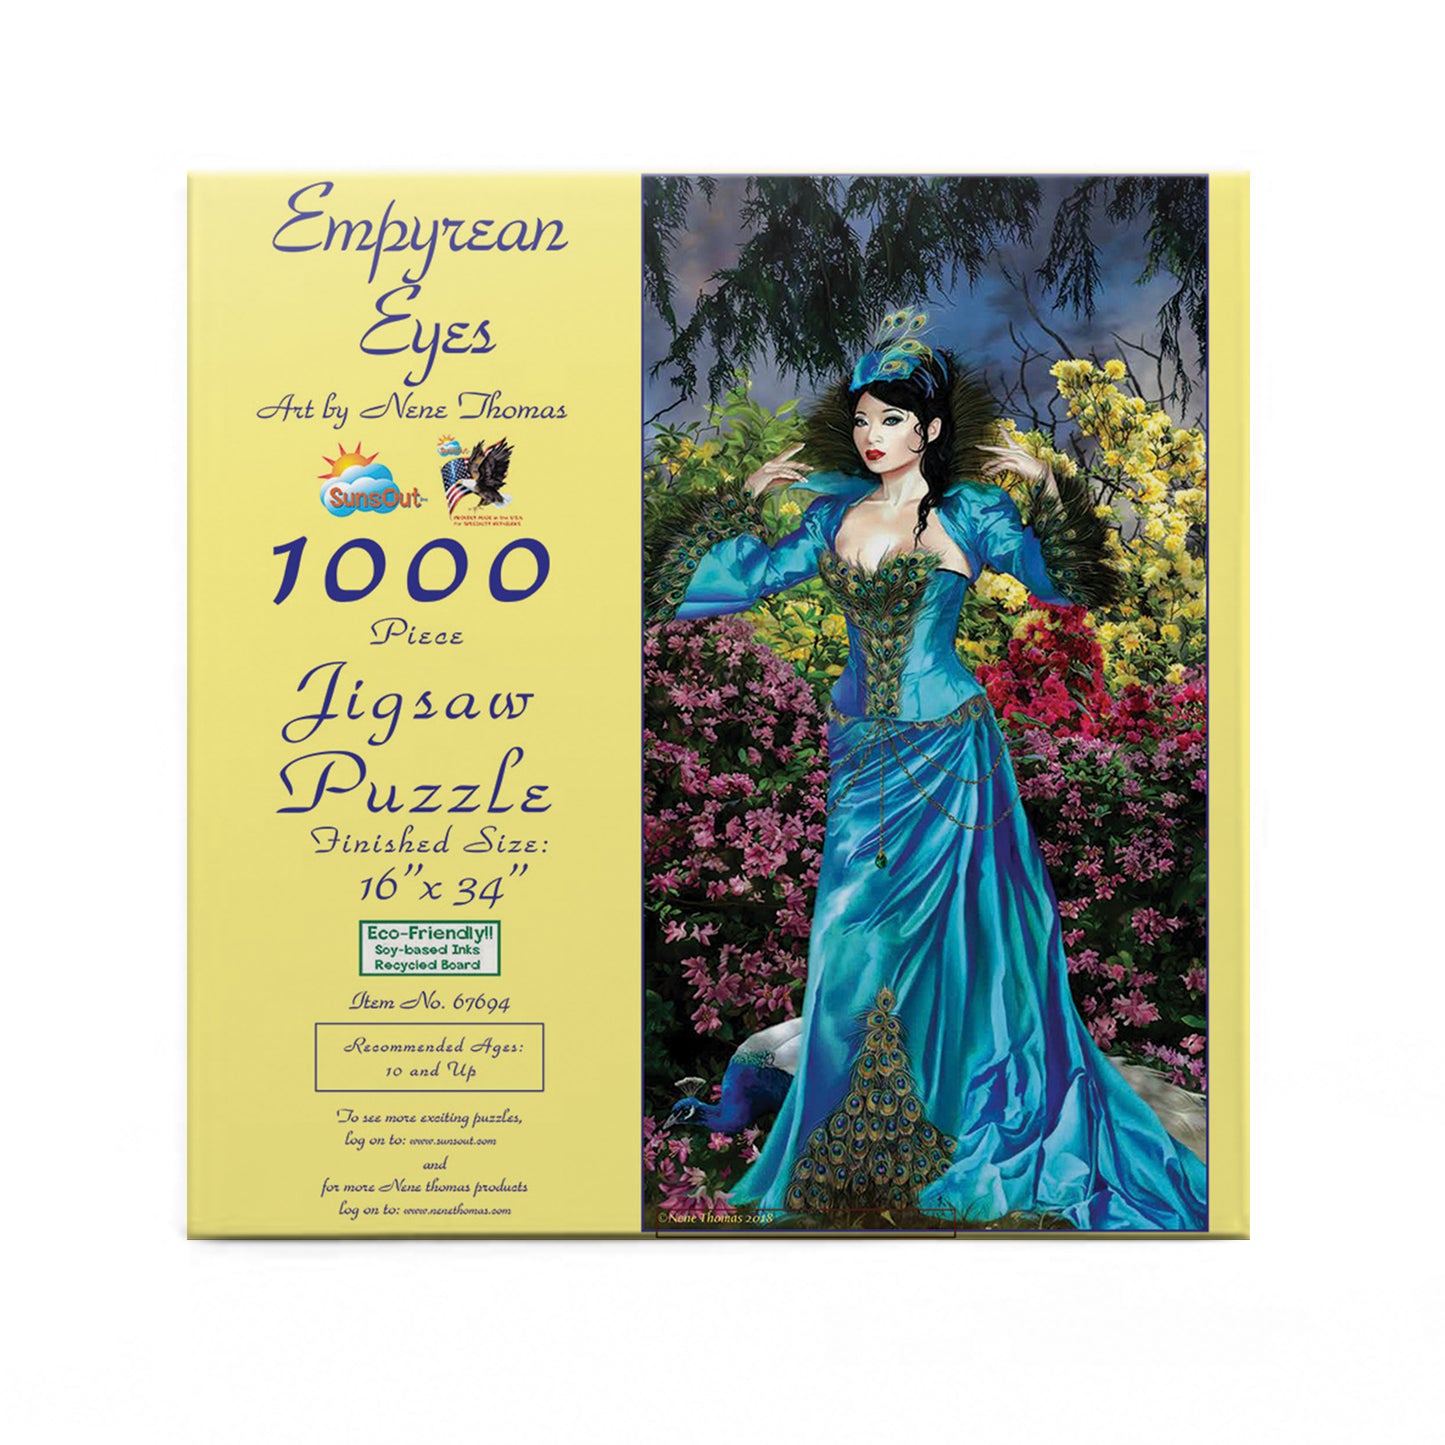 Empyrean Eyes - 1000 Piece Jigsaw Puzzle